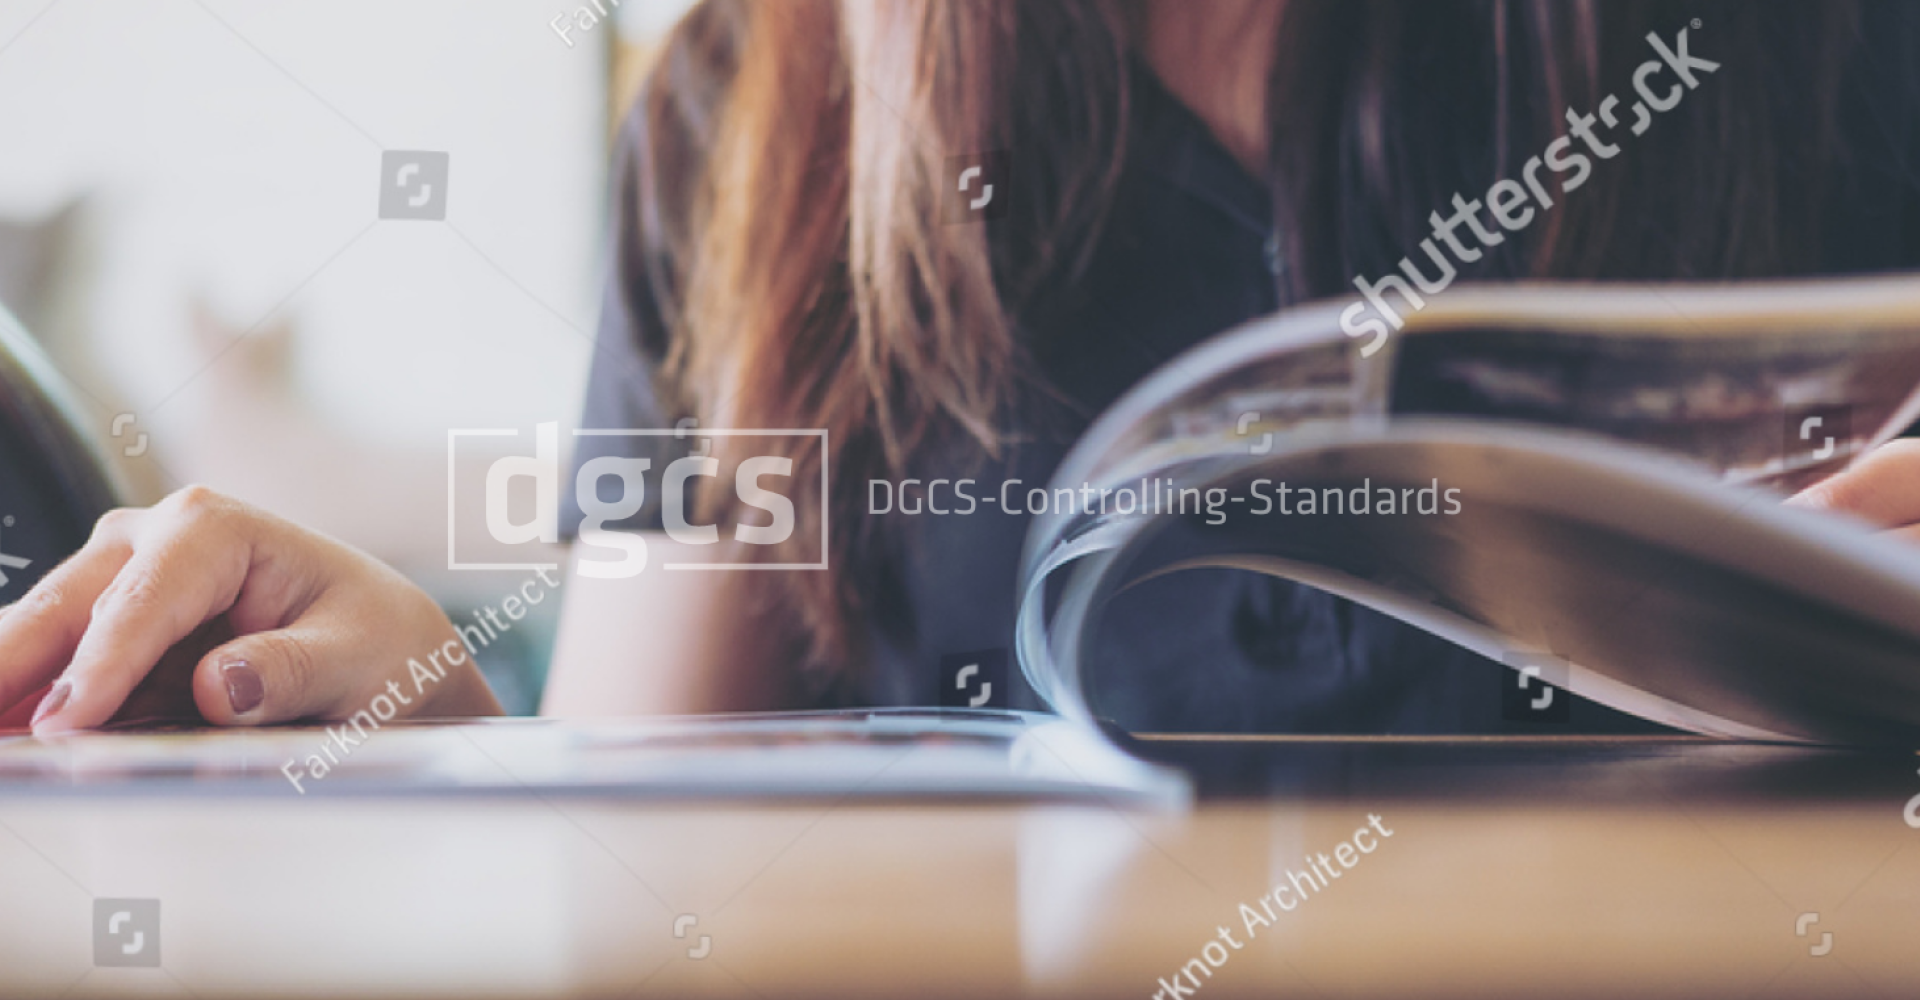 DGCS-Controlling-Standards